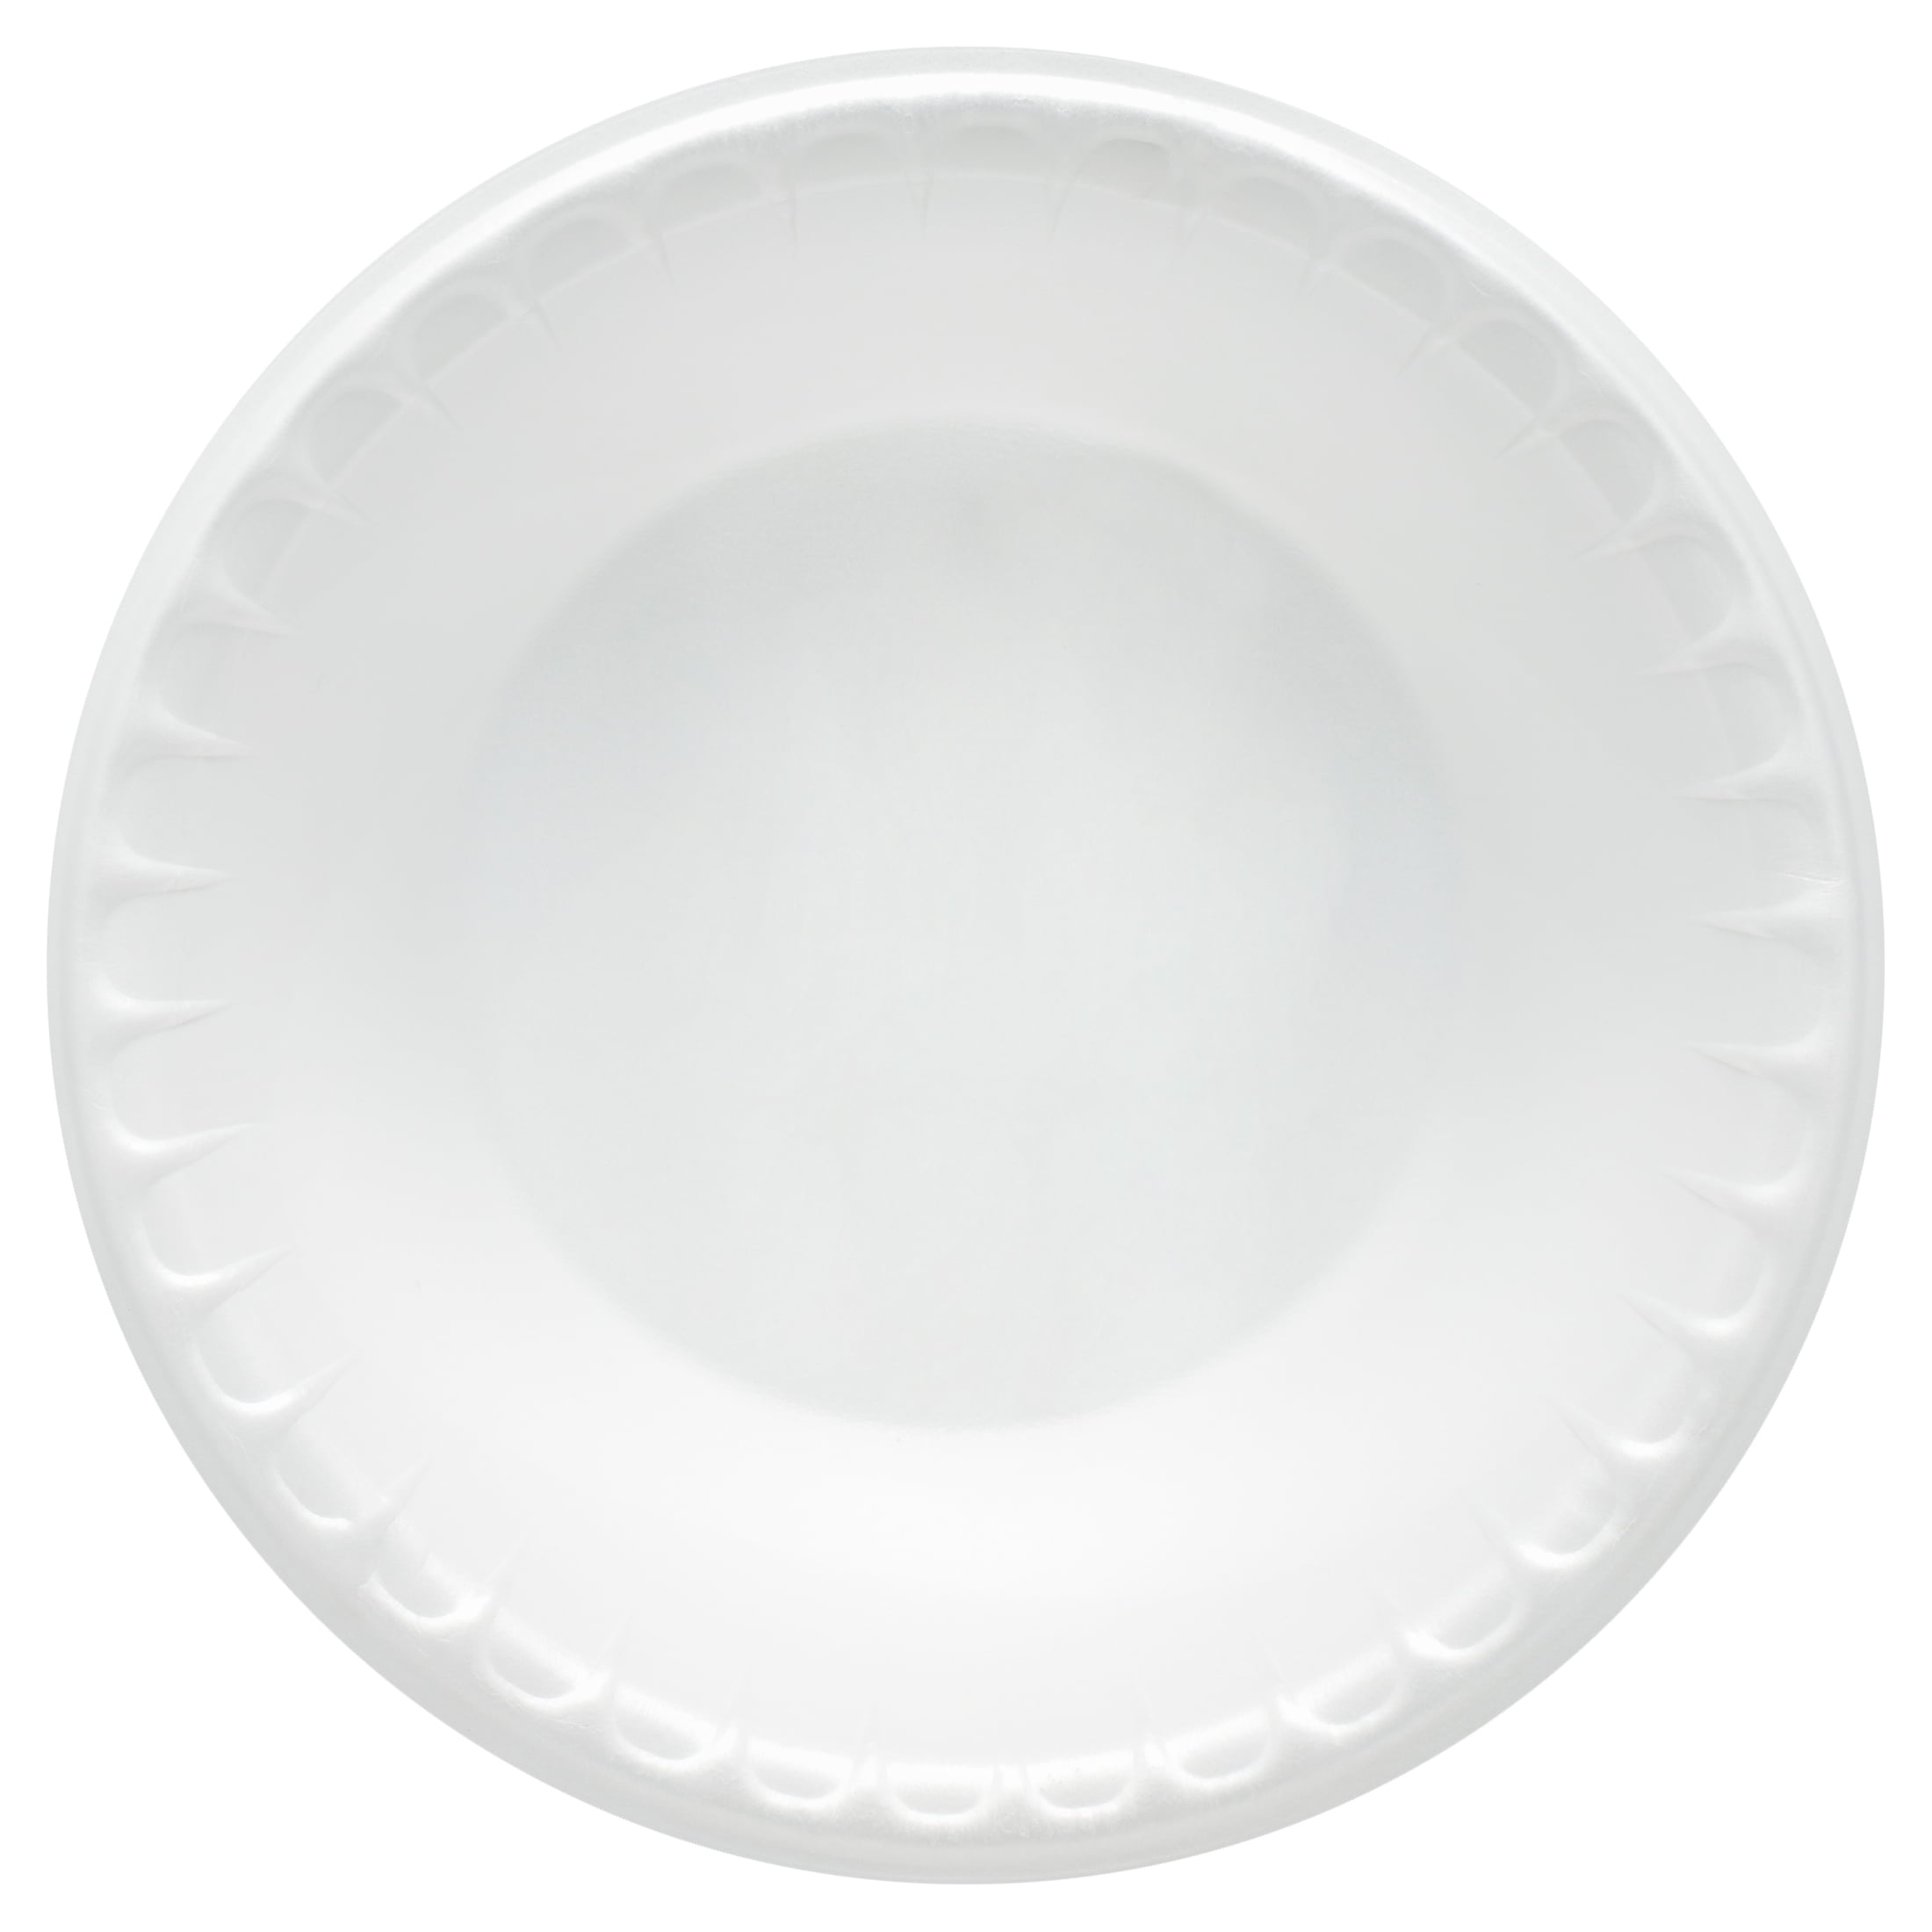 Hefty Soak Proof Tableware, Foam Bowls, 20oz, 55/Pack (D22155)